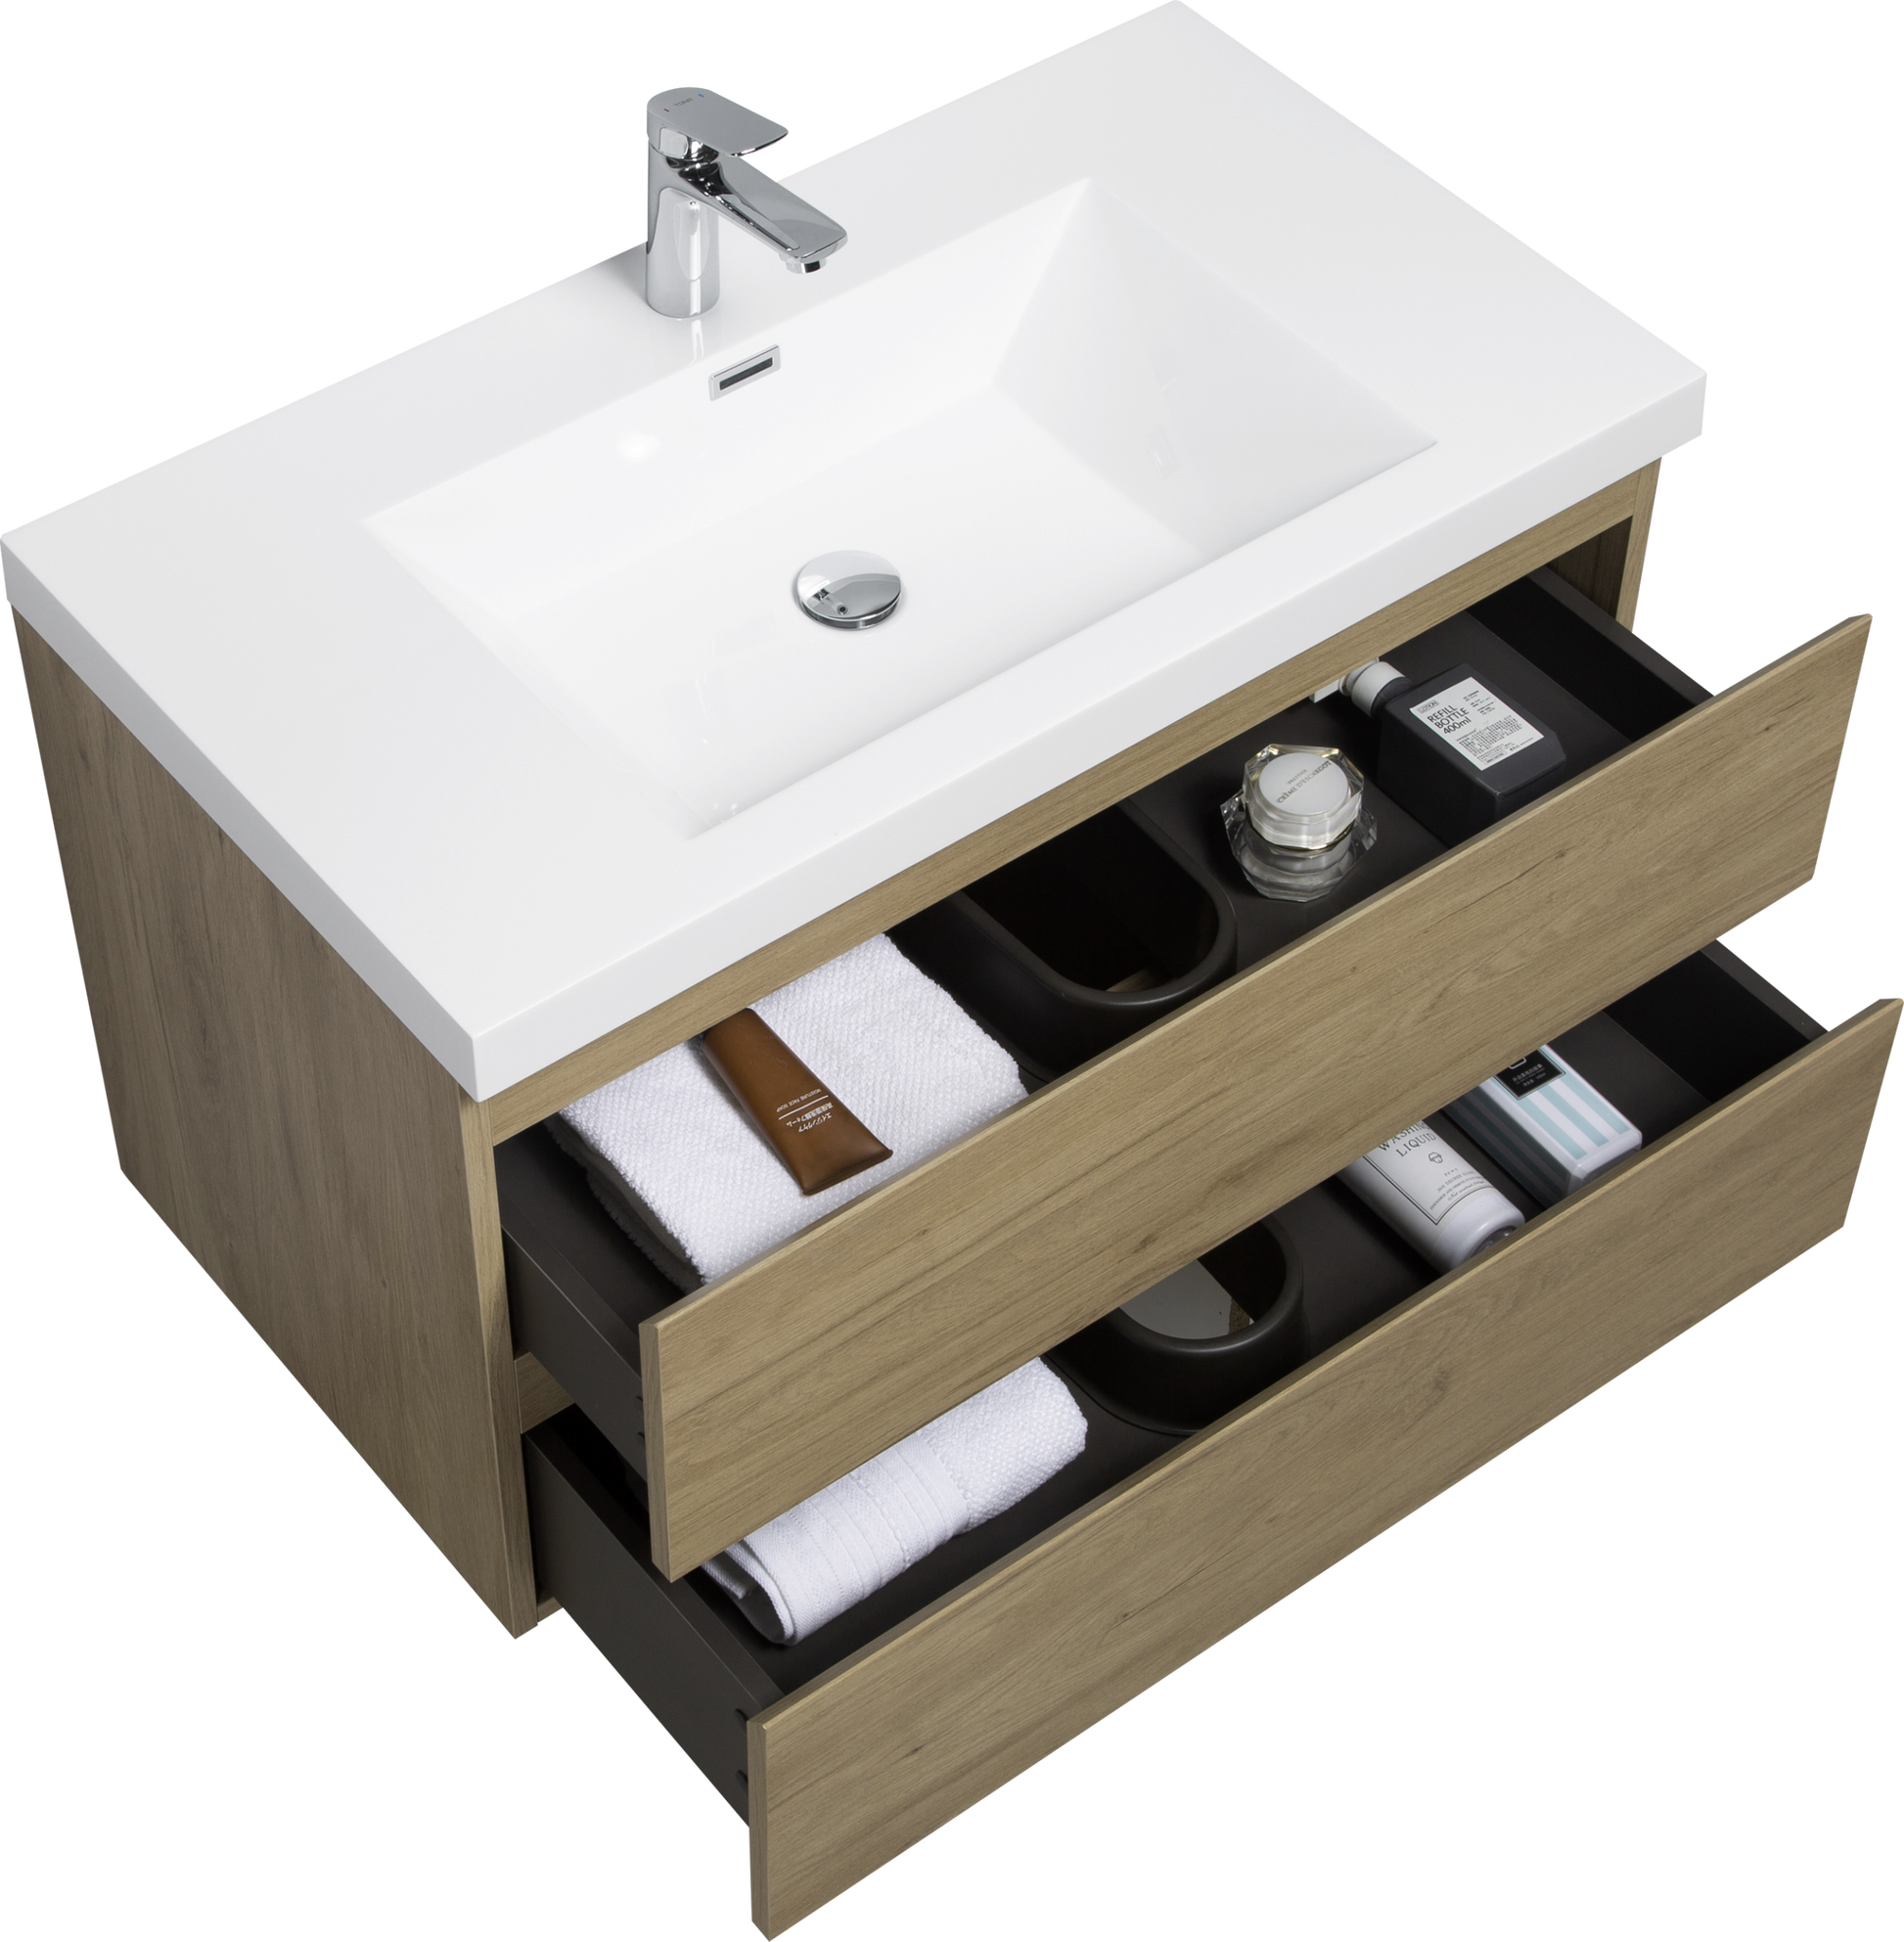 36" Floating Bathroom Vanity with Sink, Modern Wall 2-oak-bathroom-wall mounted-mdf